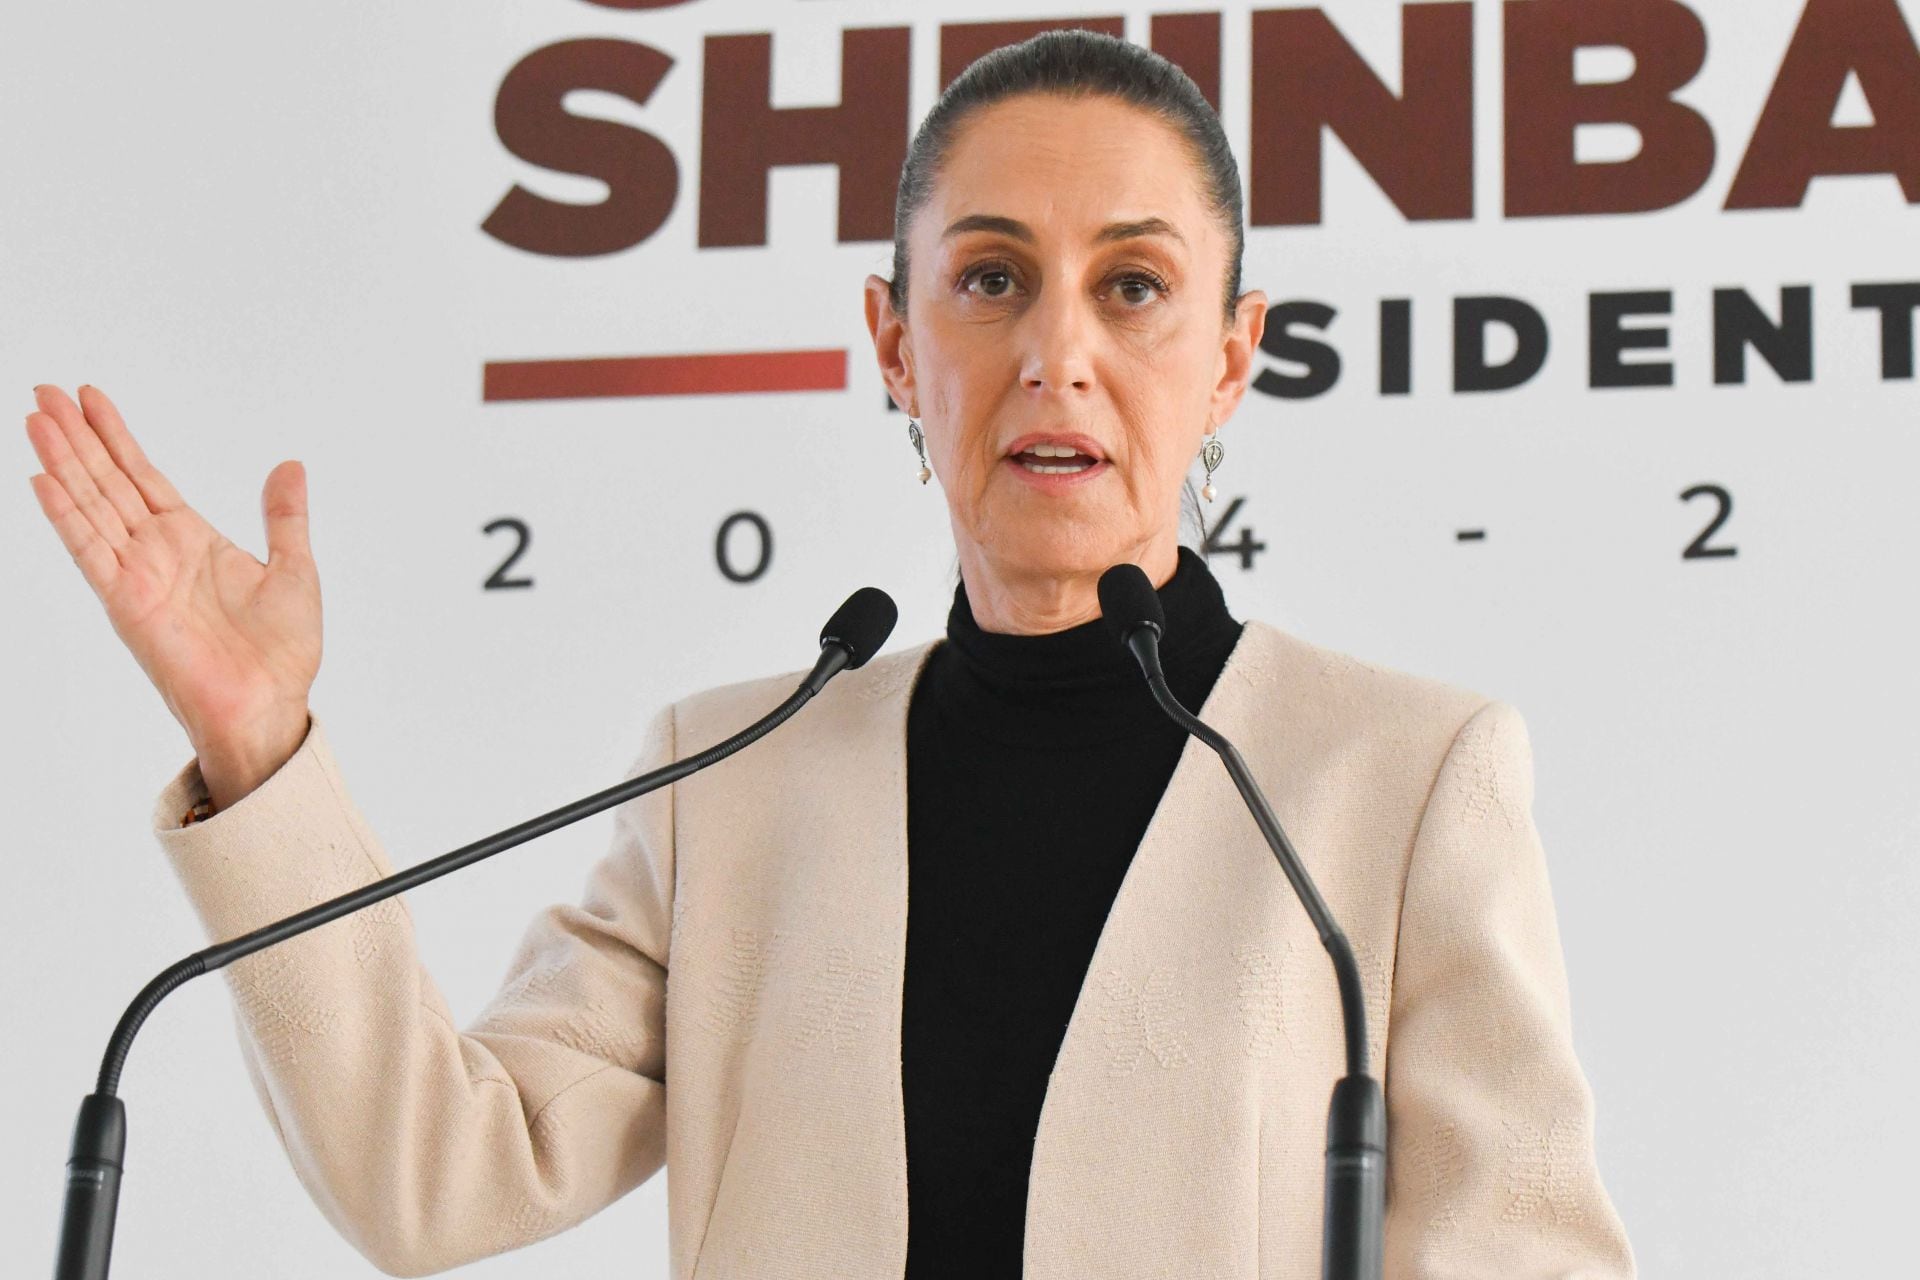 Claudia Sheinbaum, candidata electa presidenta de México